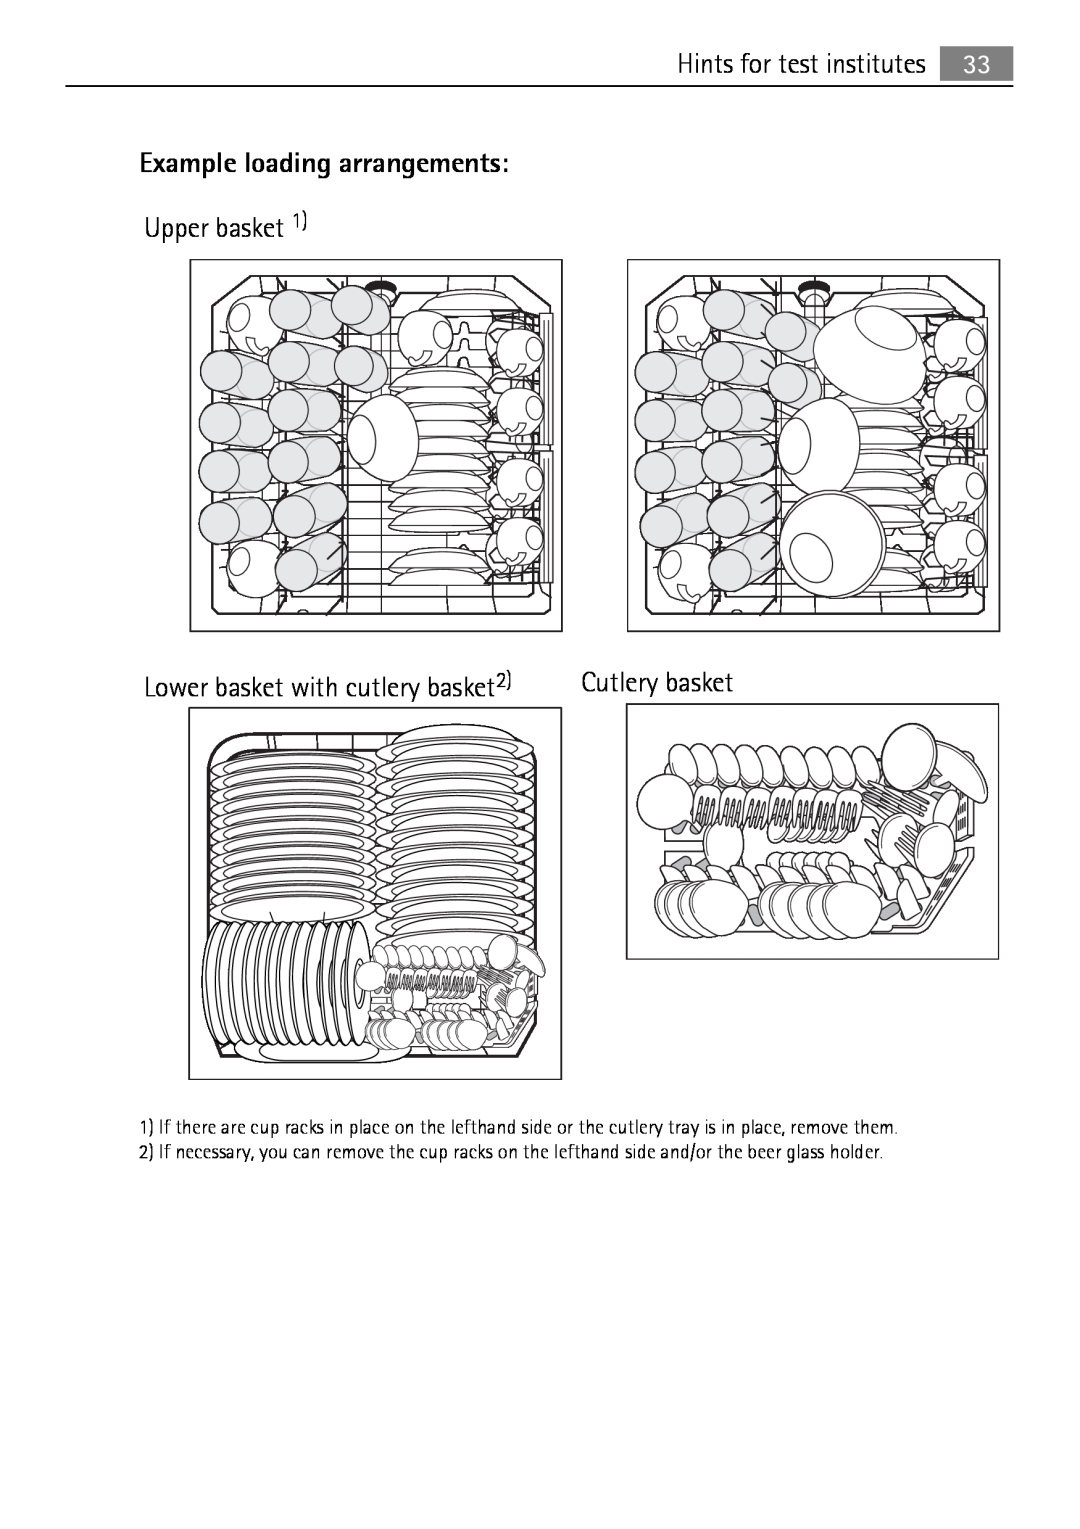 Electrolux 50870 user manual Example loading arrangements, Upper basket, Cutlery basket, Lower basket with cutlery basket 